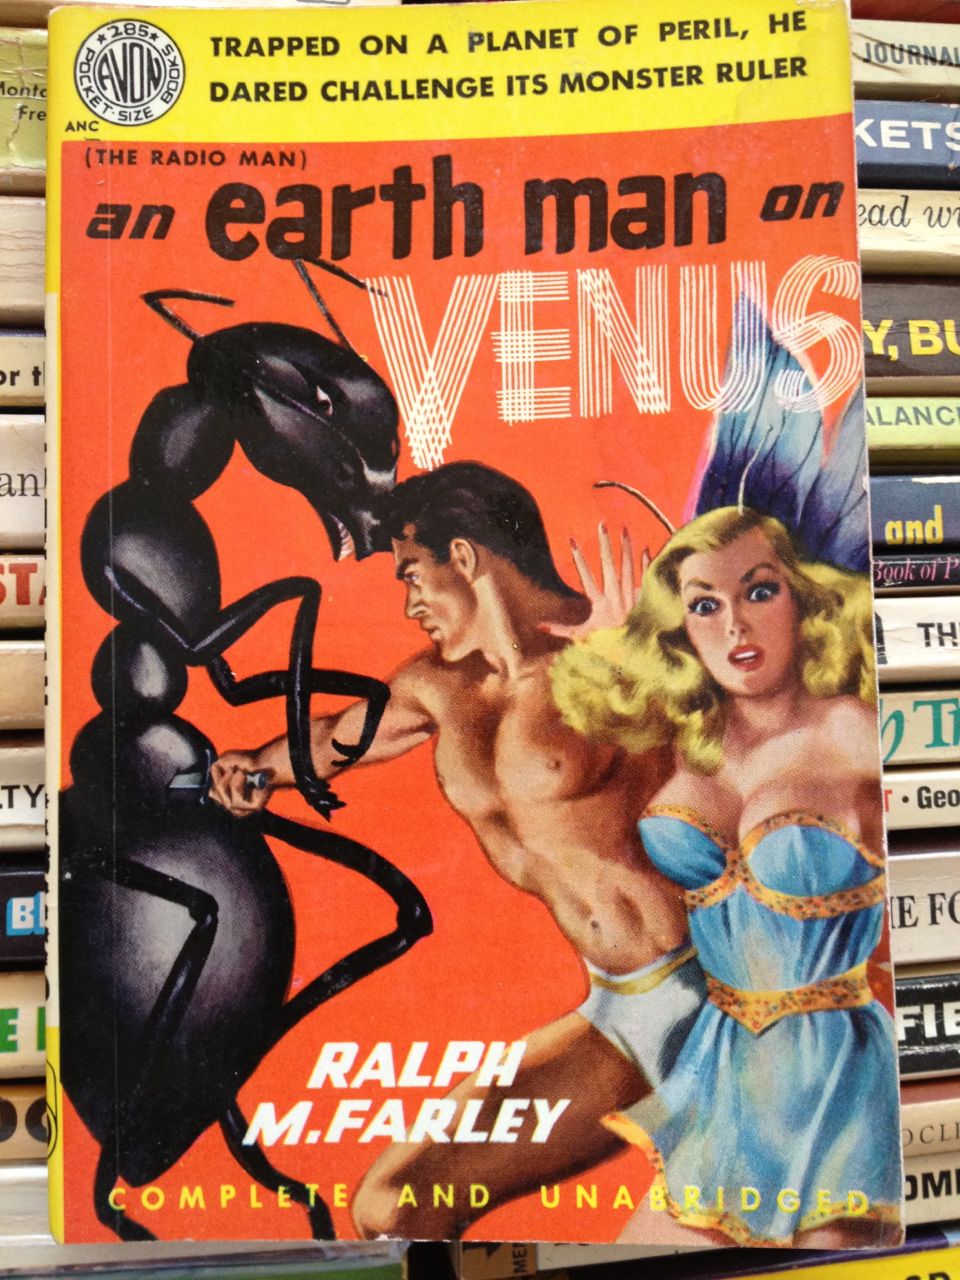 An Earth Man On Venus #26